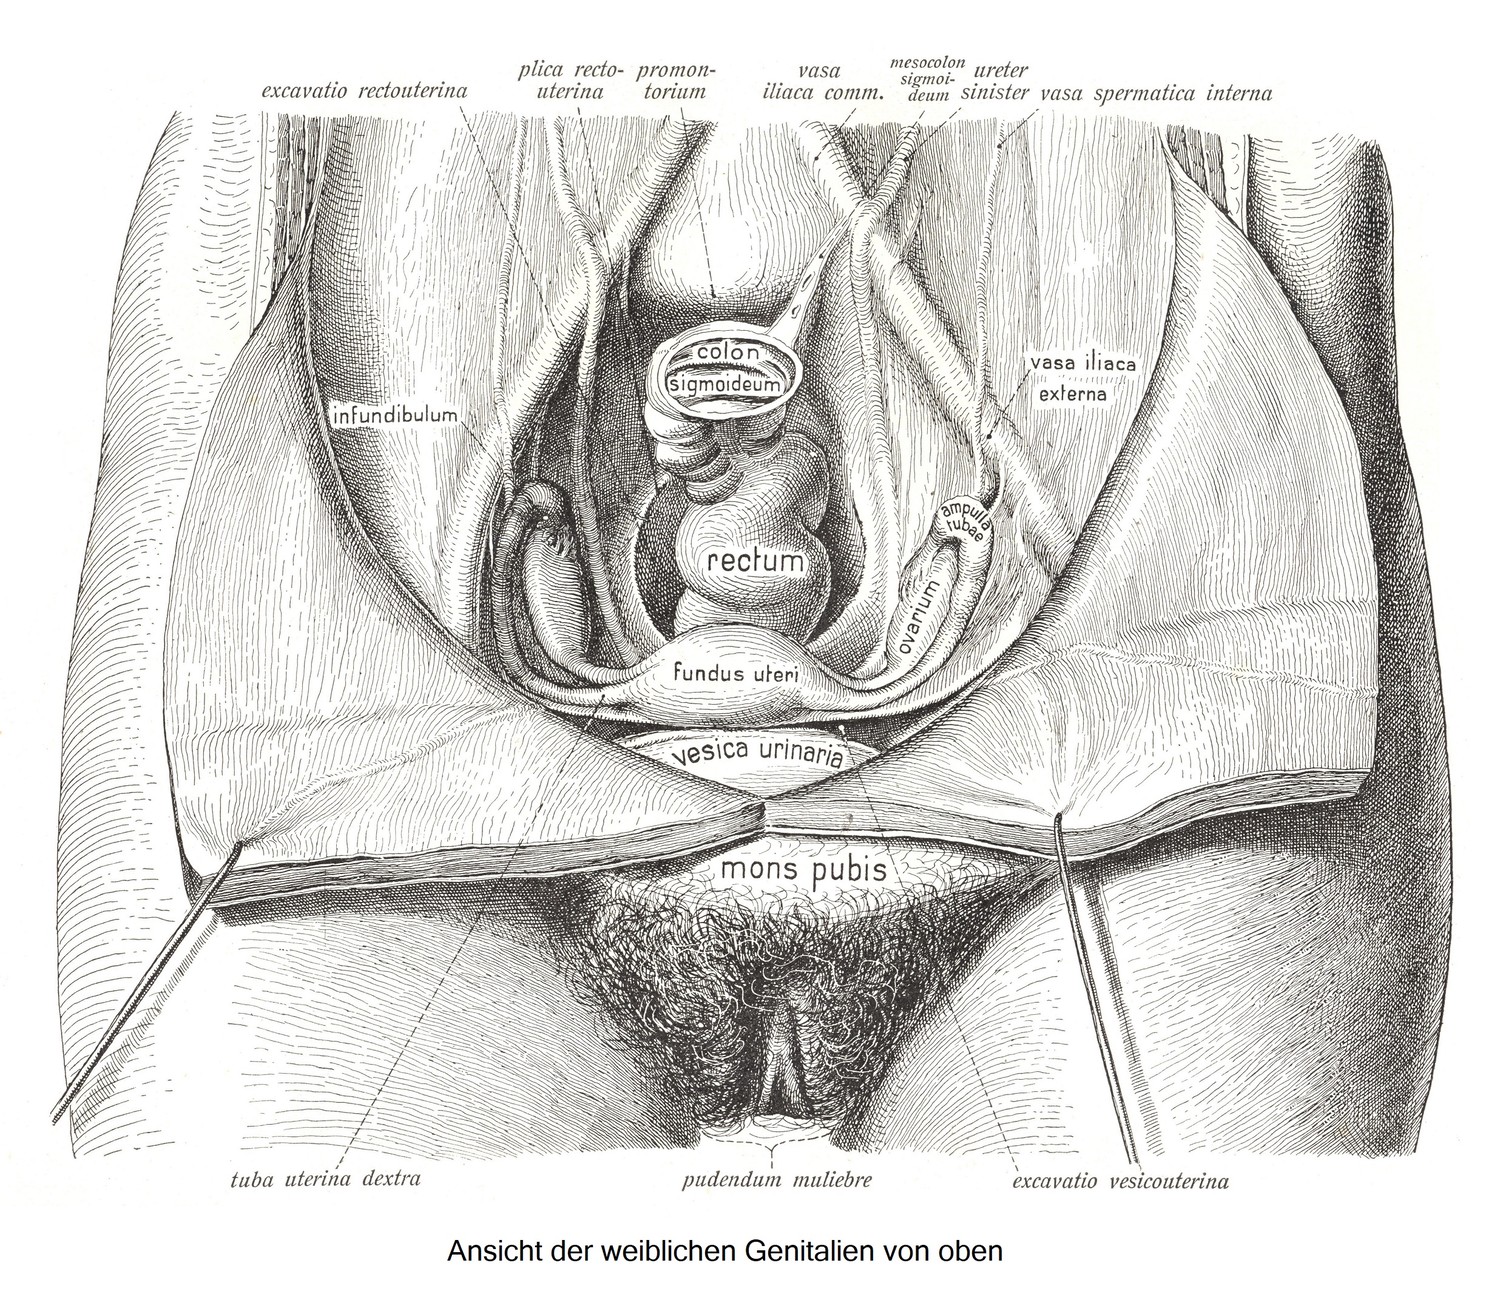 Weibliche Genitalien, genitalia muliebra